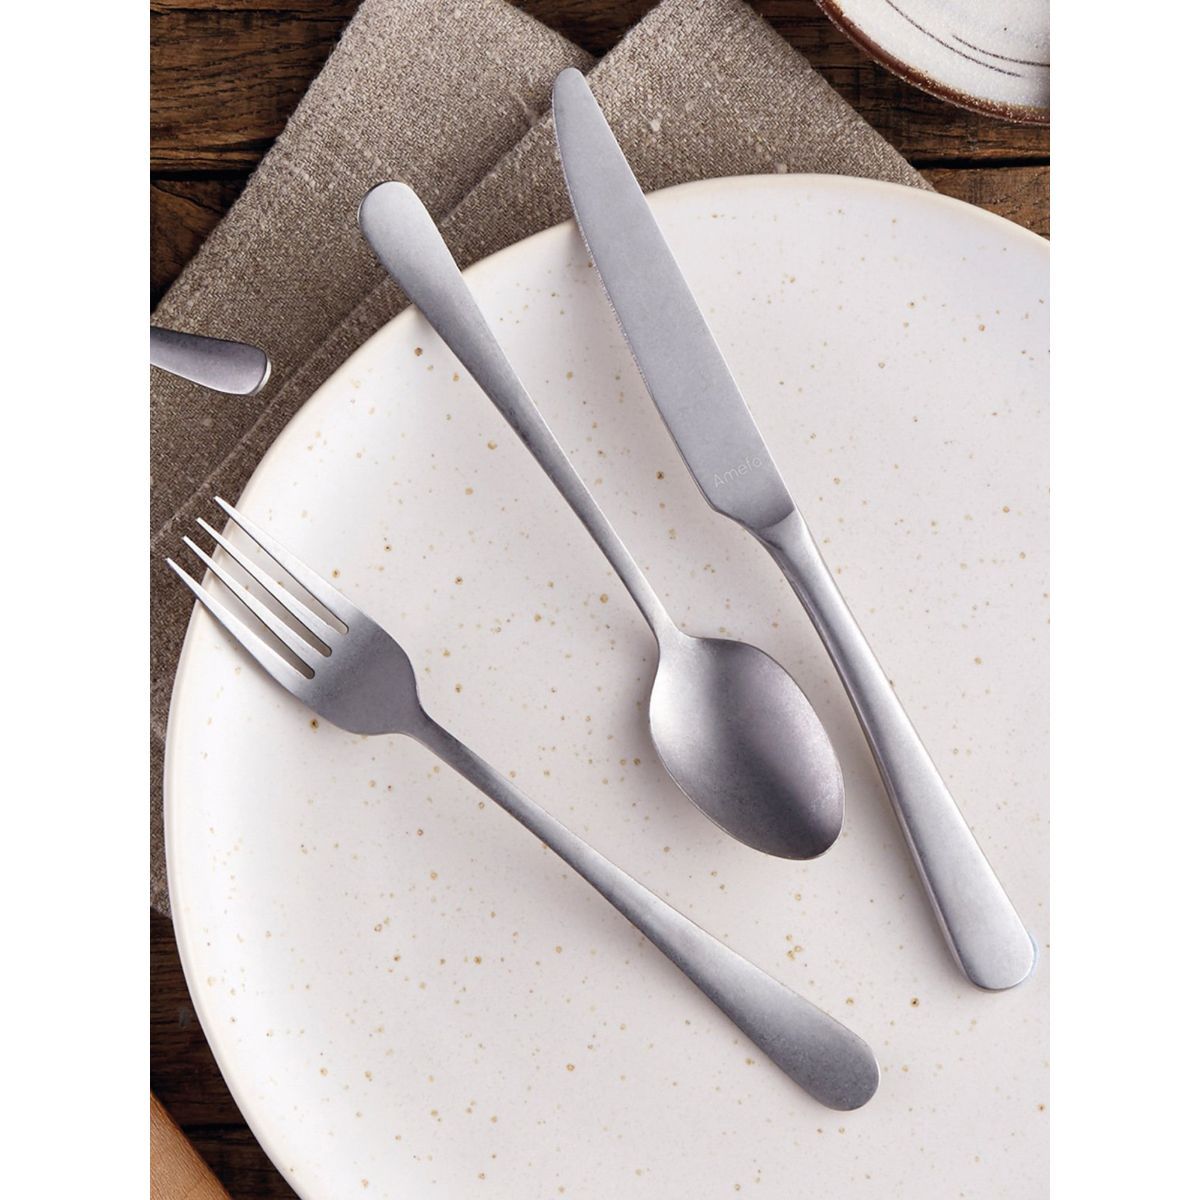 Amefa Austin Stonewash Stainless Steel Dinner Fork Set, 12-Pieces